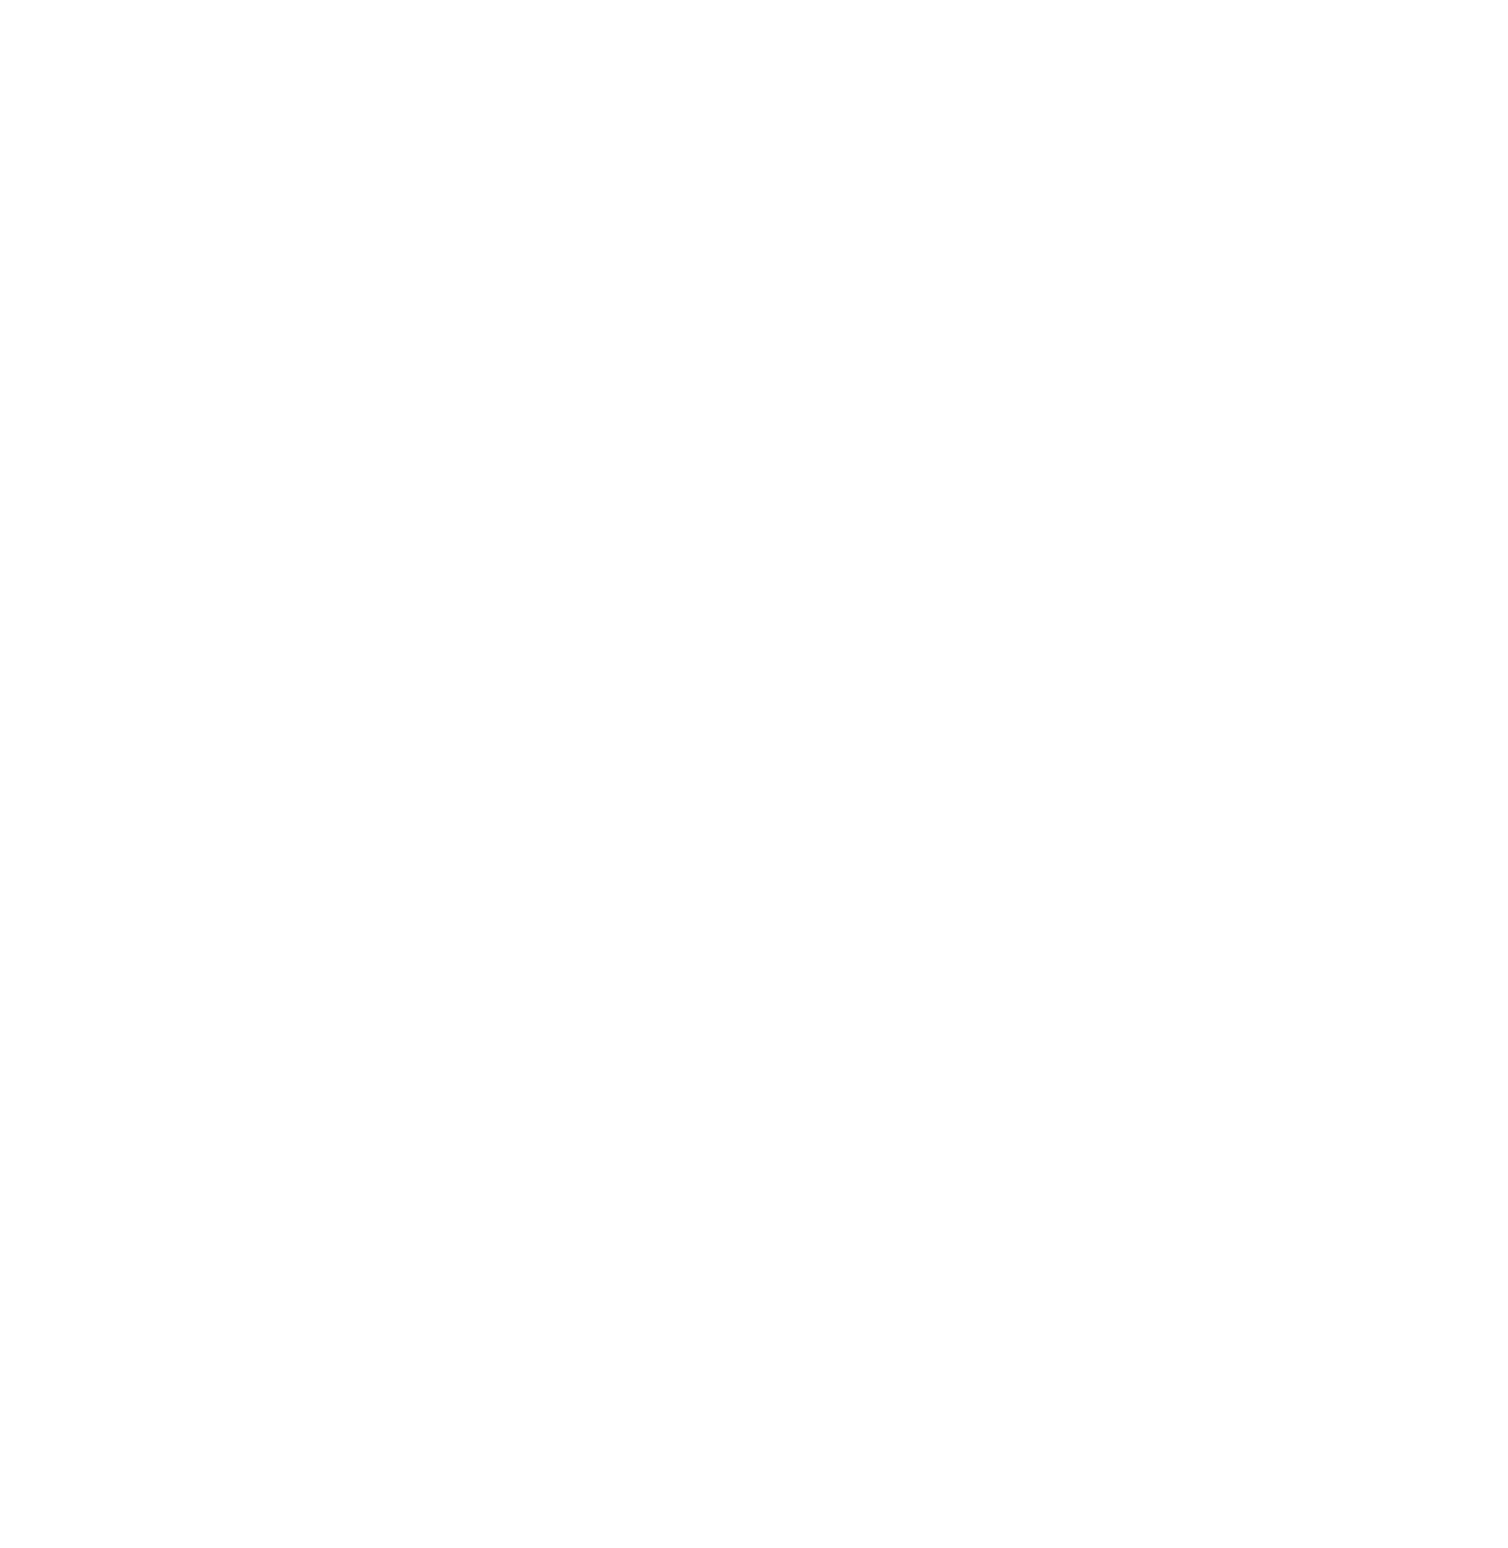 Performant Financial logo for dark backgrounds (transparent PNG)